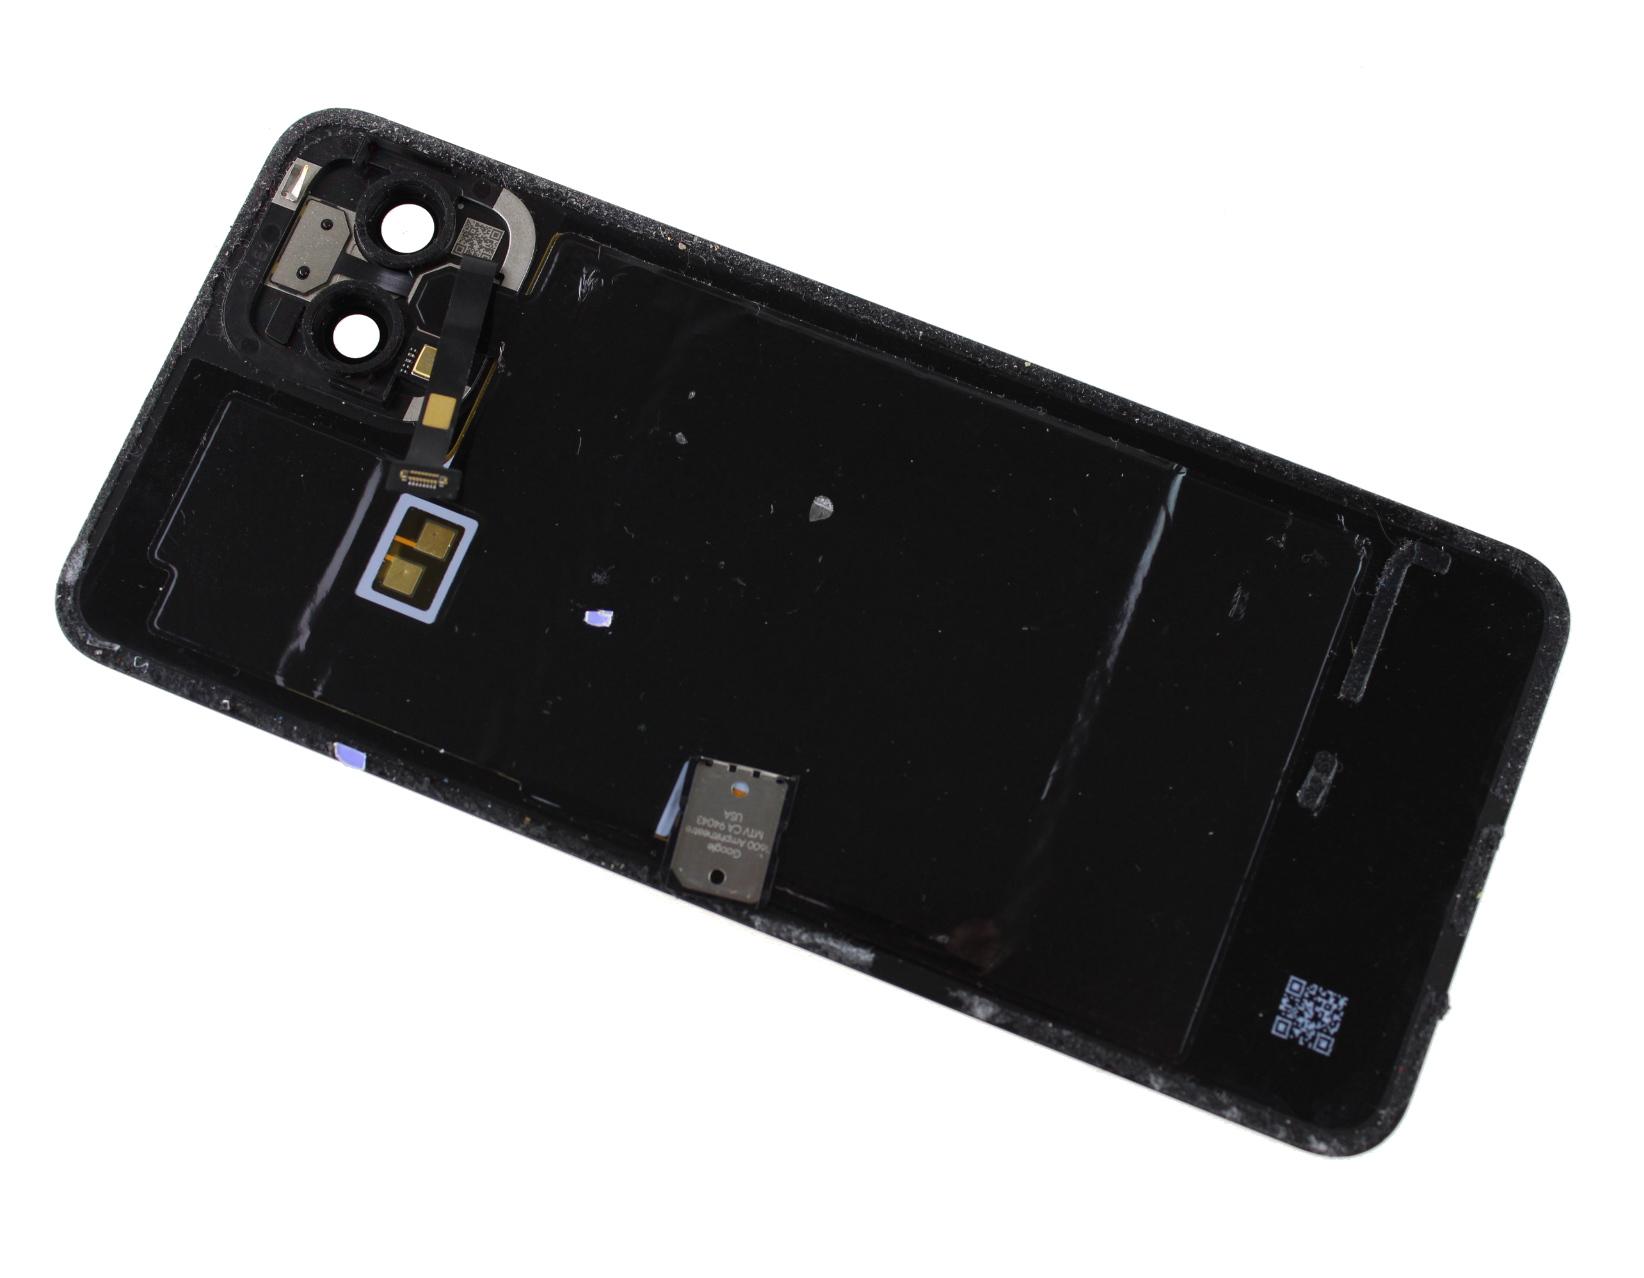 Originál kryt baterie Google Pixel 4 G020M černý - demontovaný díl